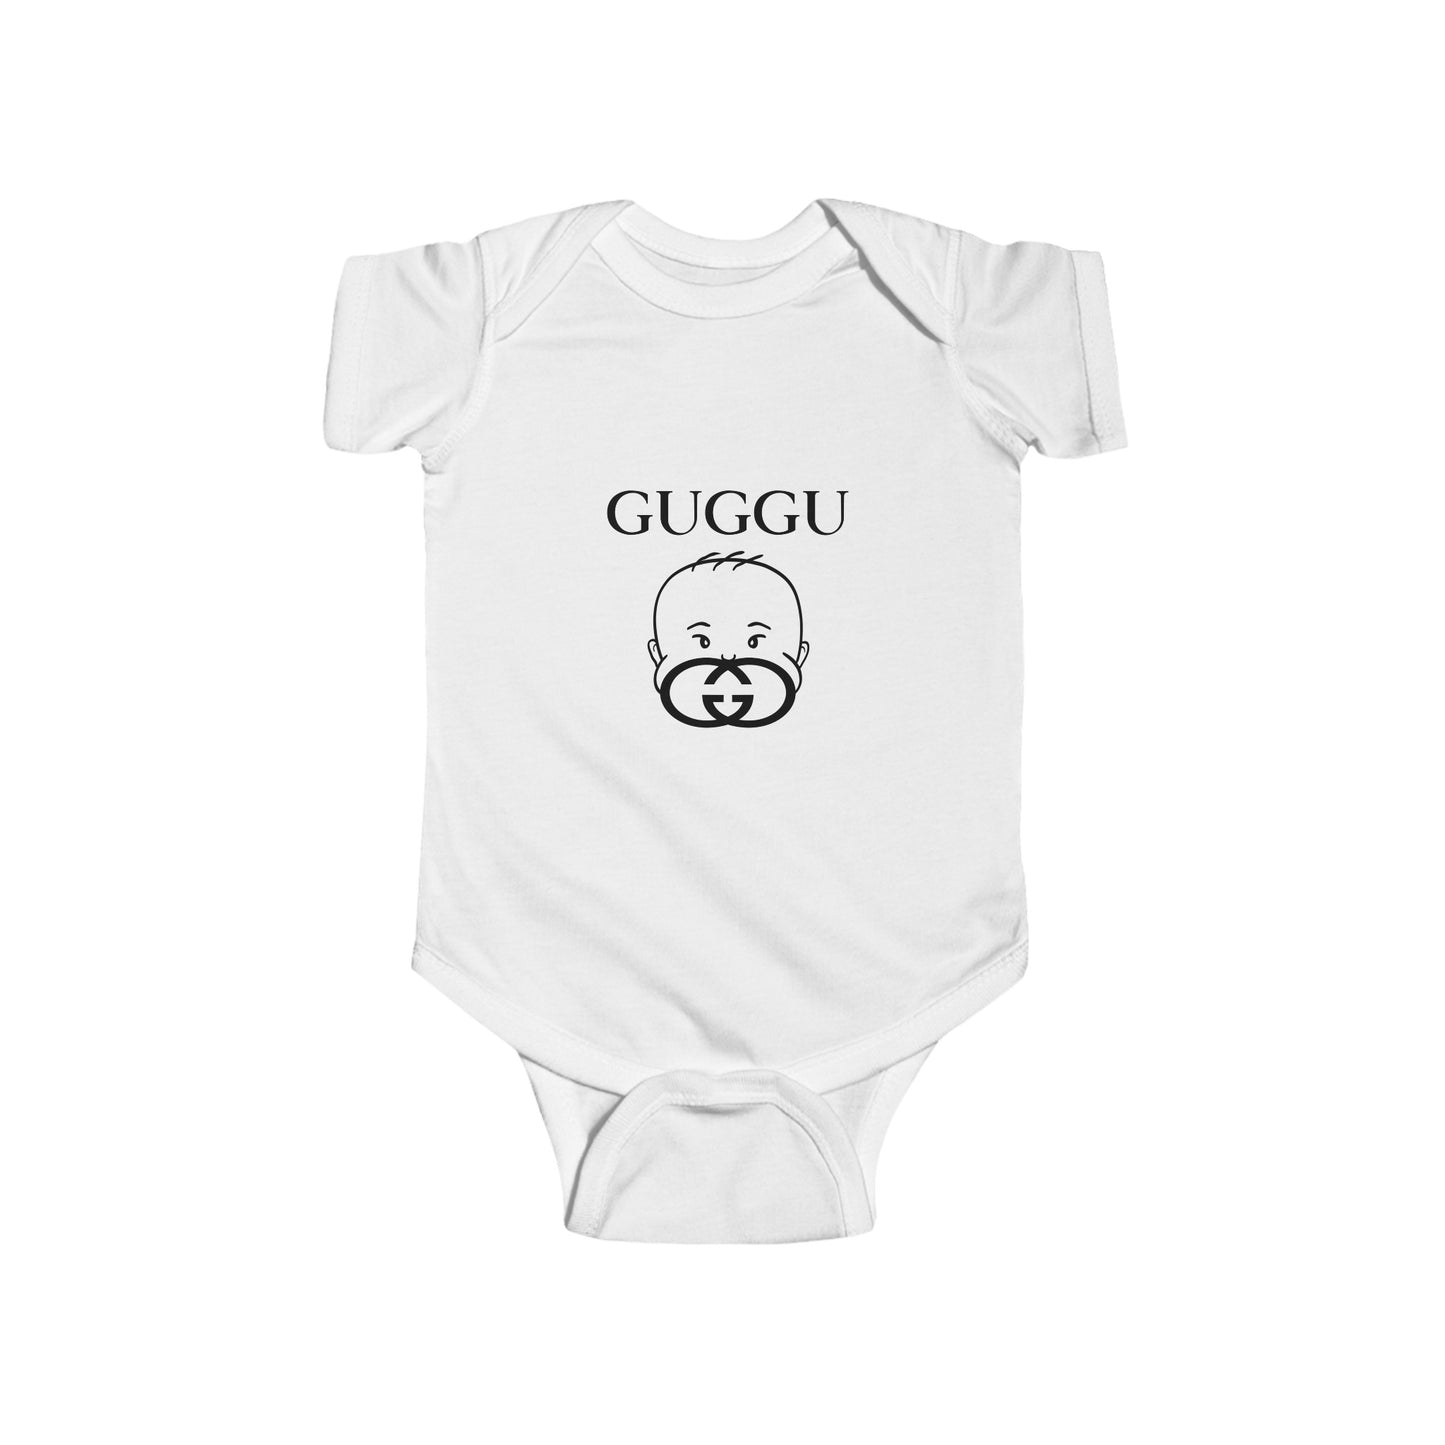 Guggu - Baby Onesie